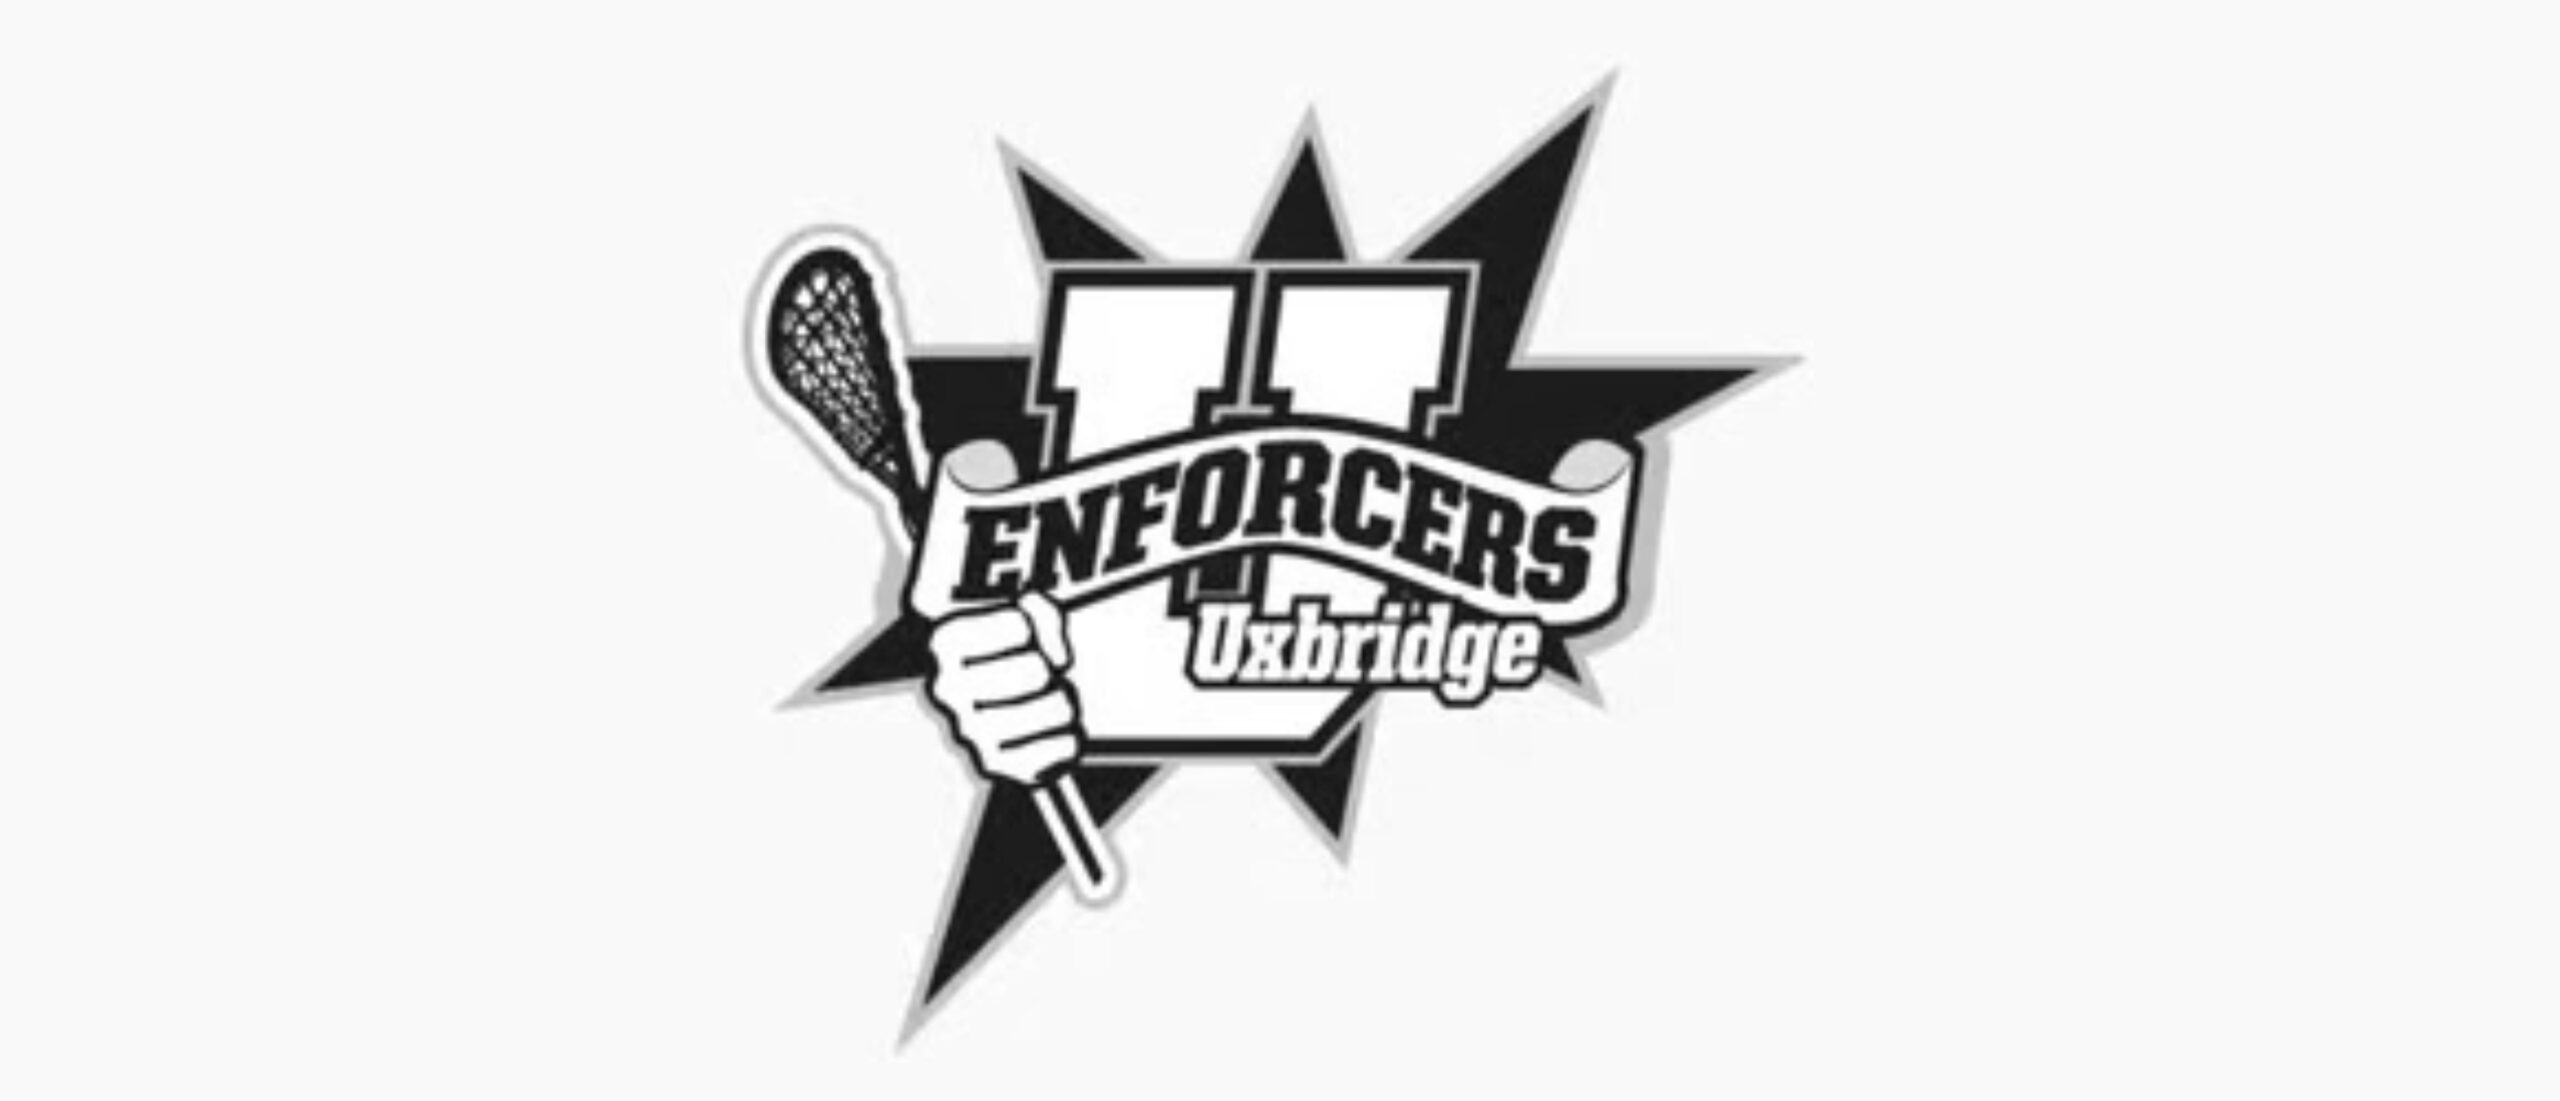 old-logo-uxbridge-enforcers-logo2